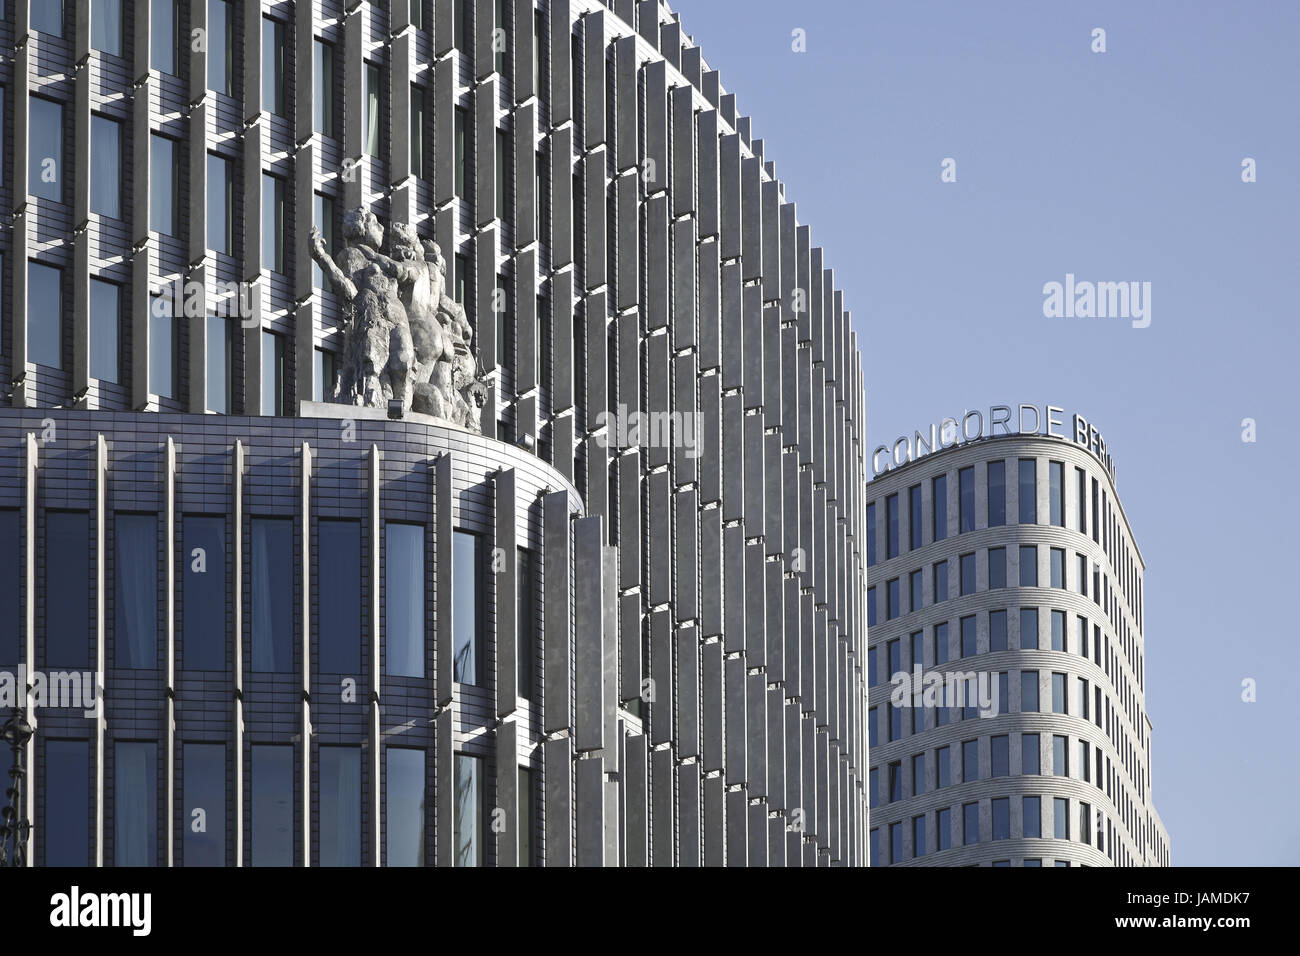 Germany,Berlin,Swissotel,Concorde hotel, Stock Photo